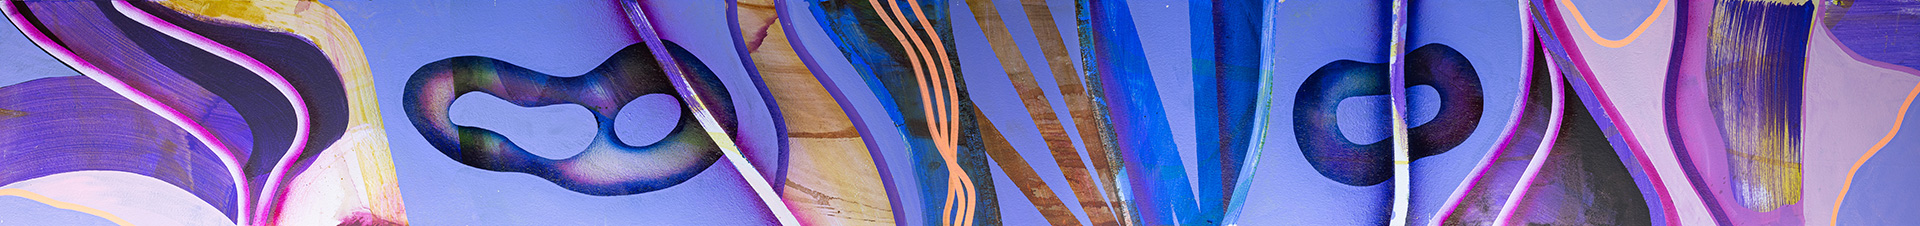 deckkraft stripes Image No. 63